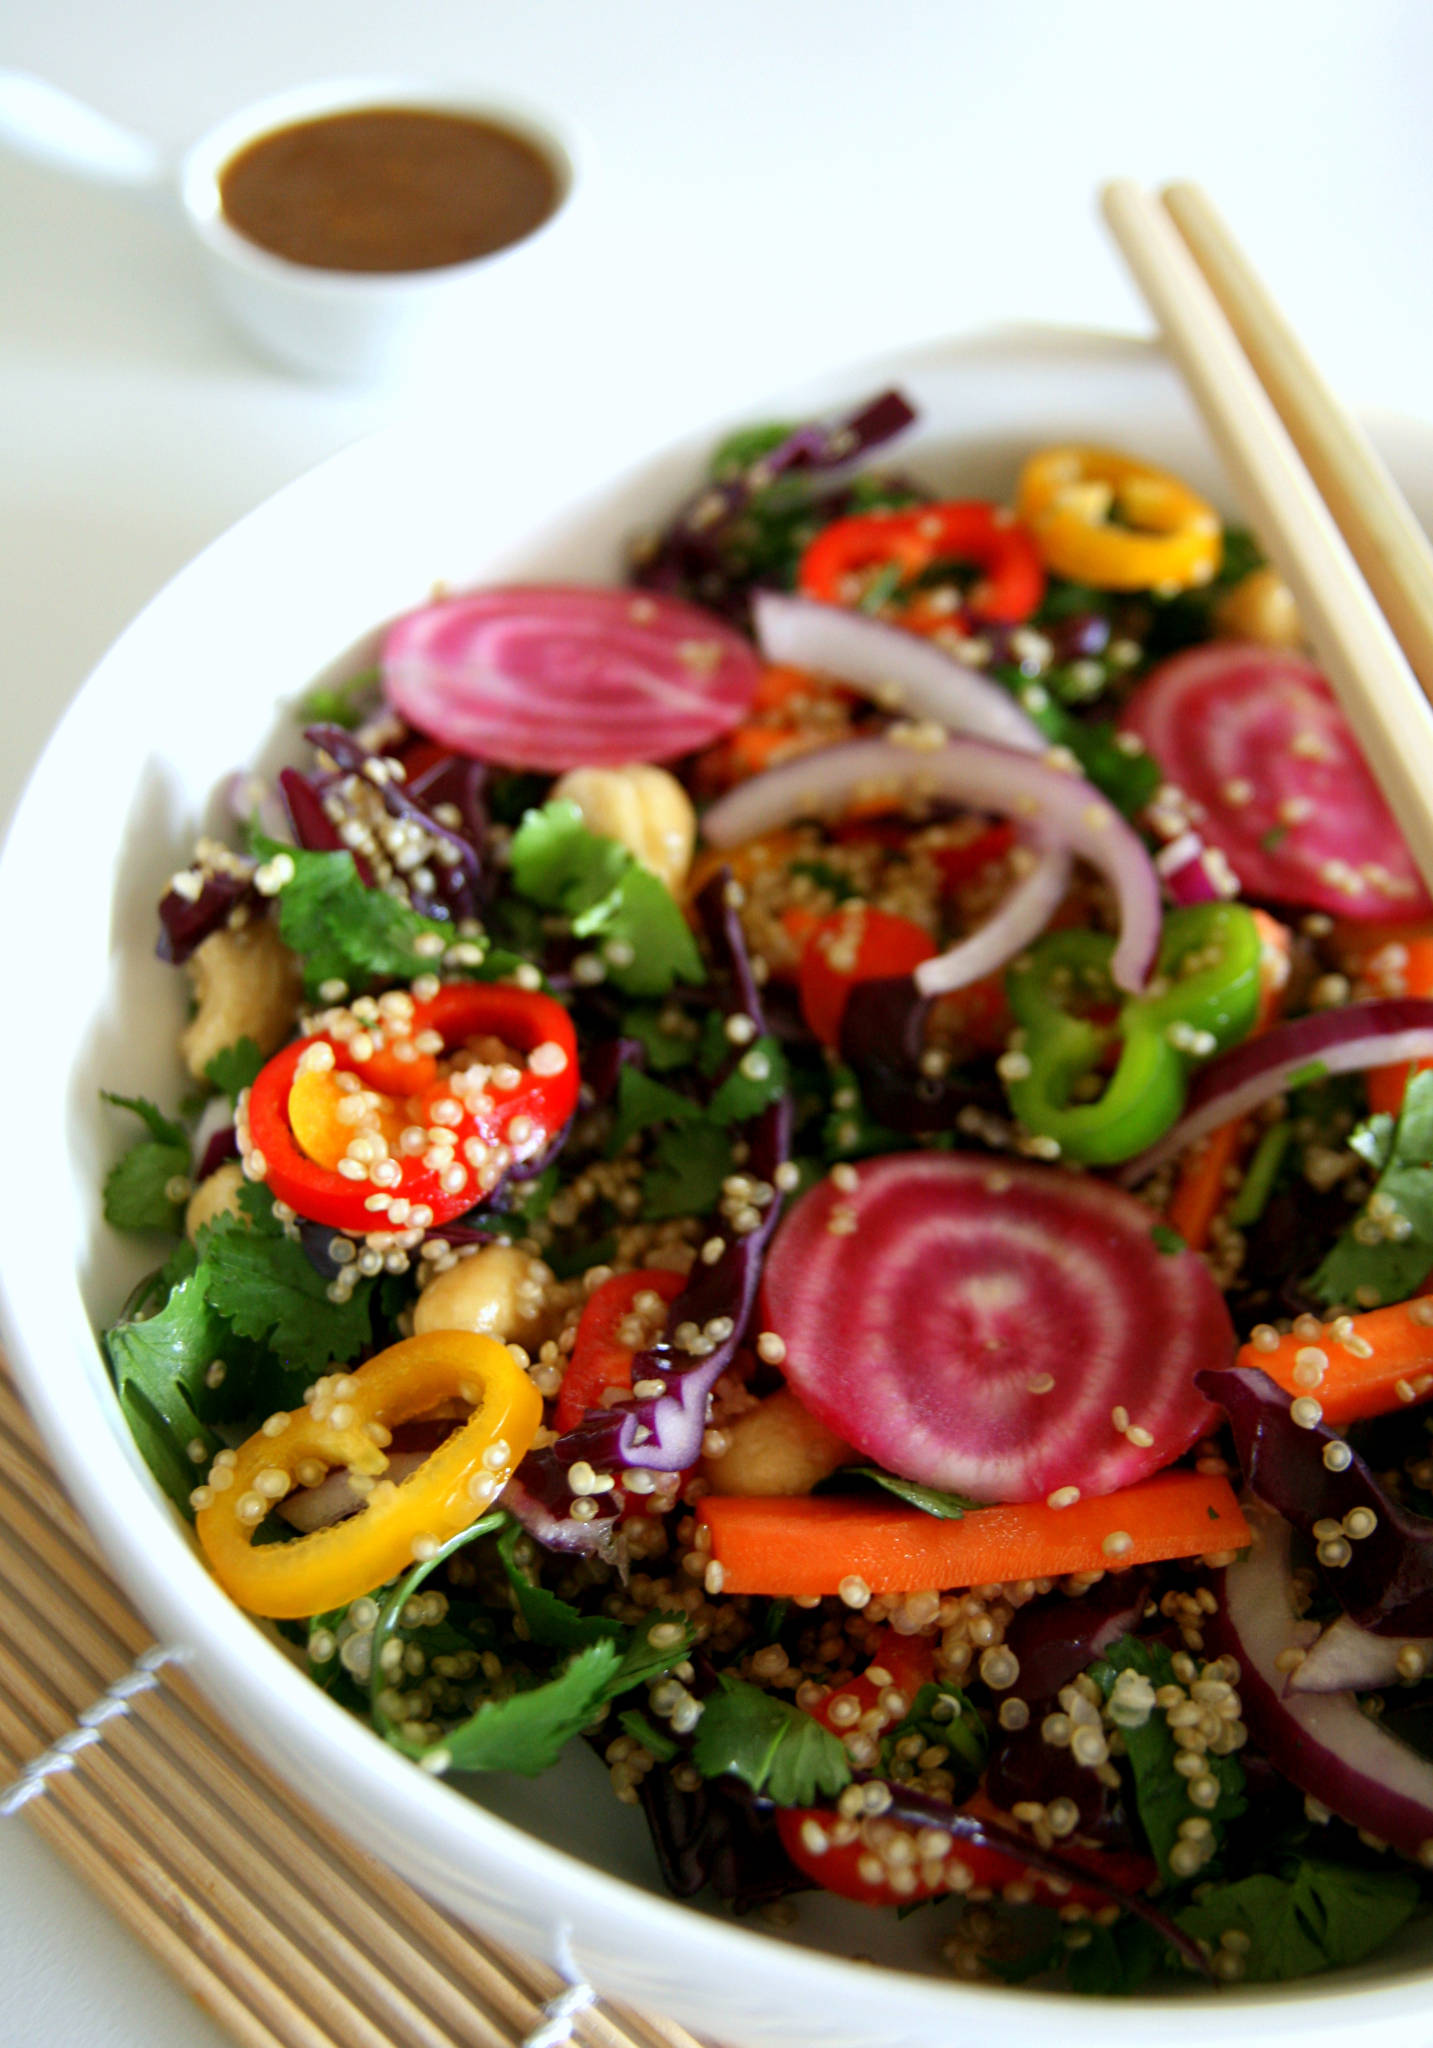 Salade de quinoa aux saveurs thaï, Diane Sauvignon blanc 2020